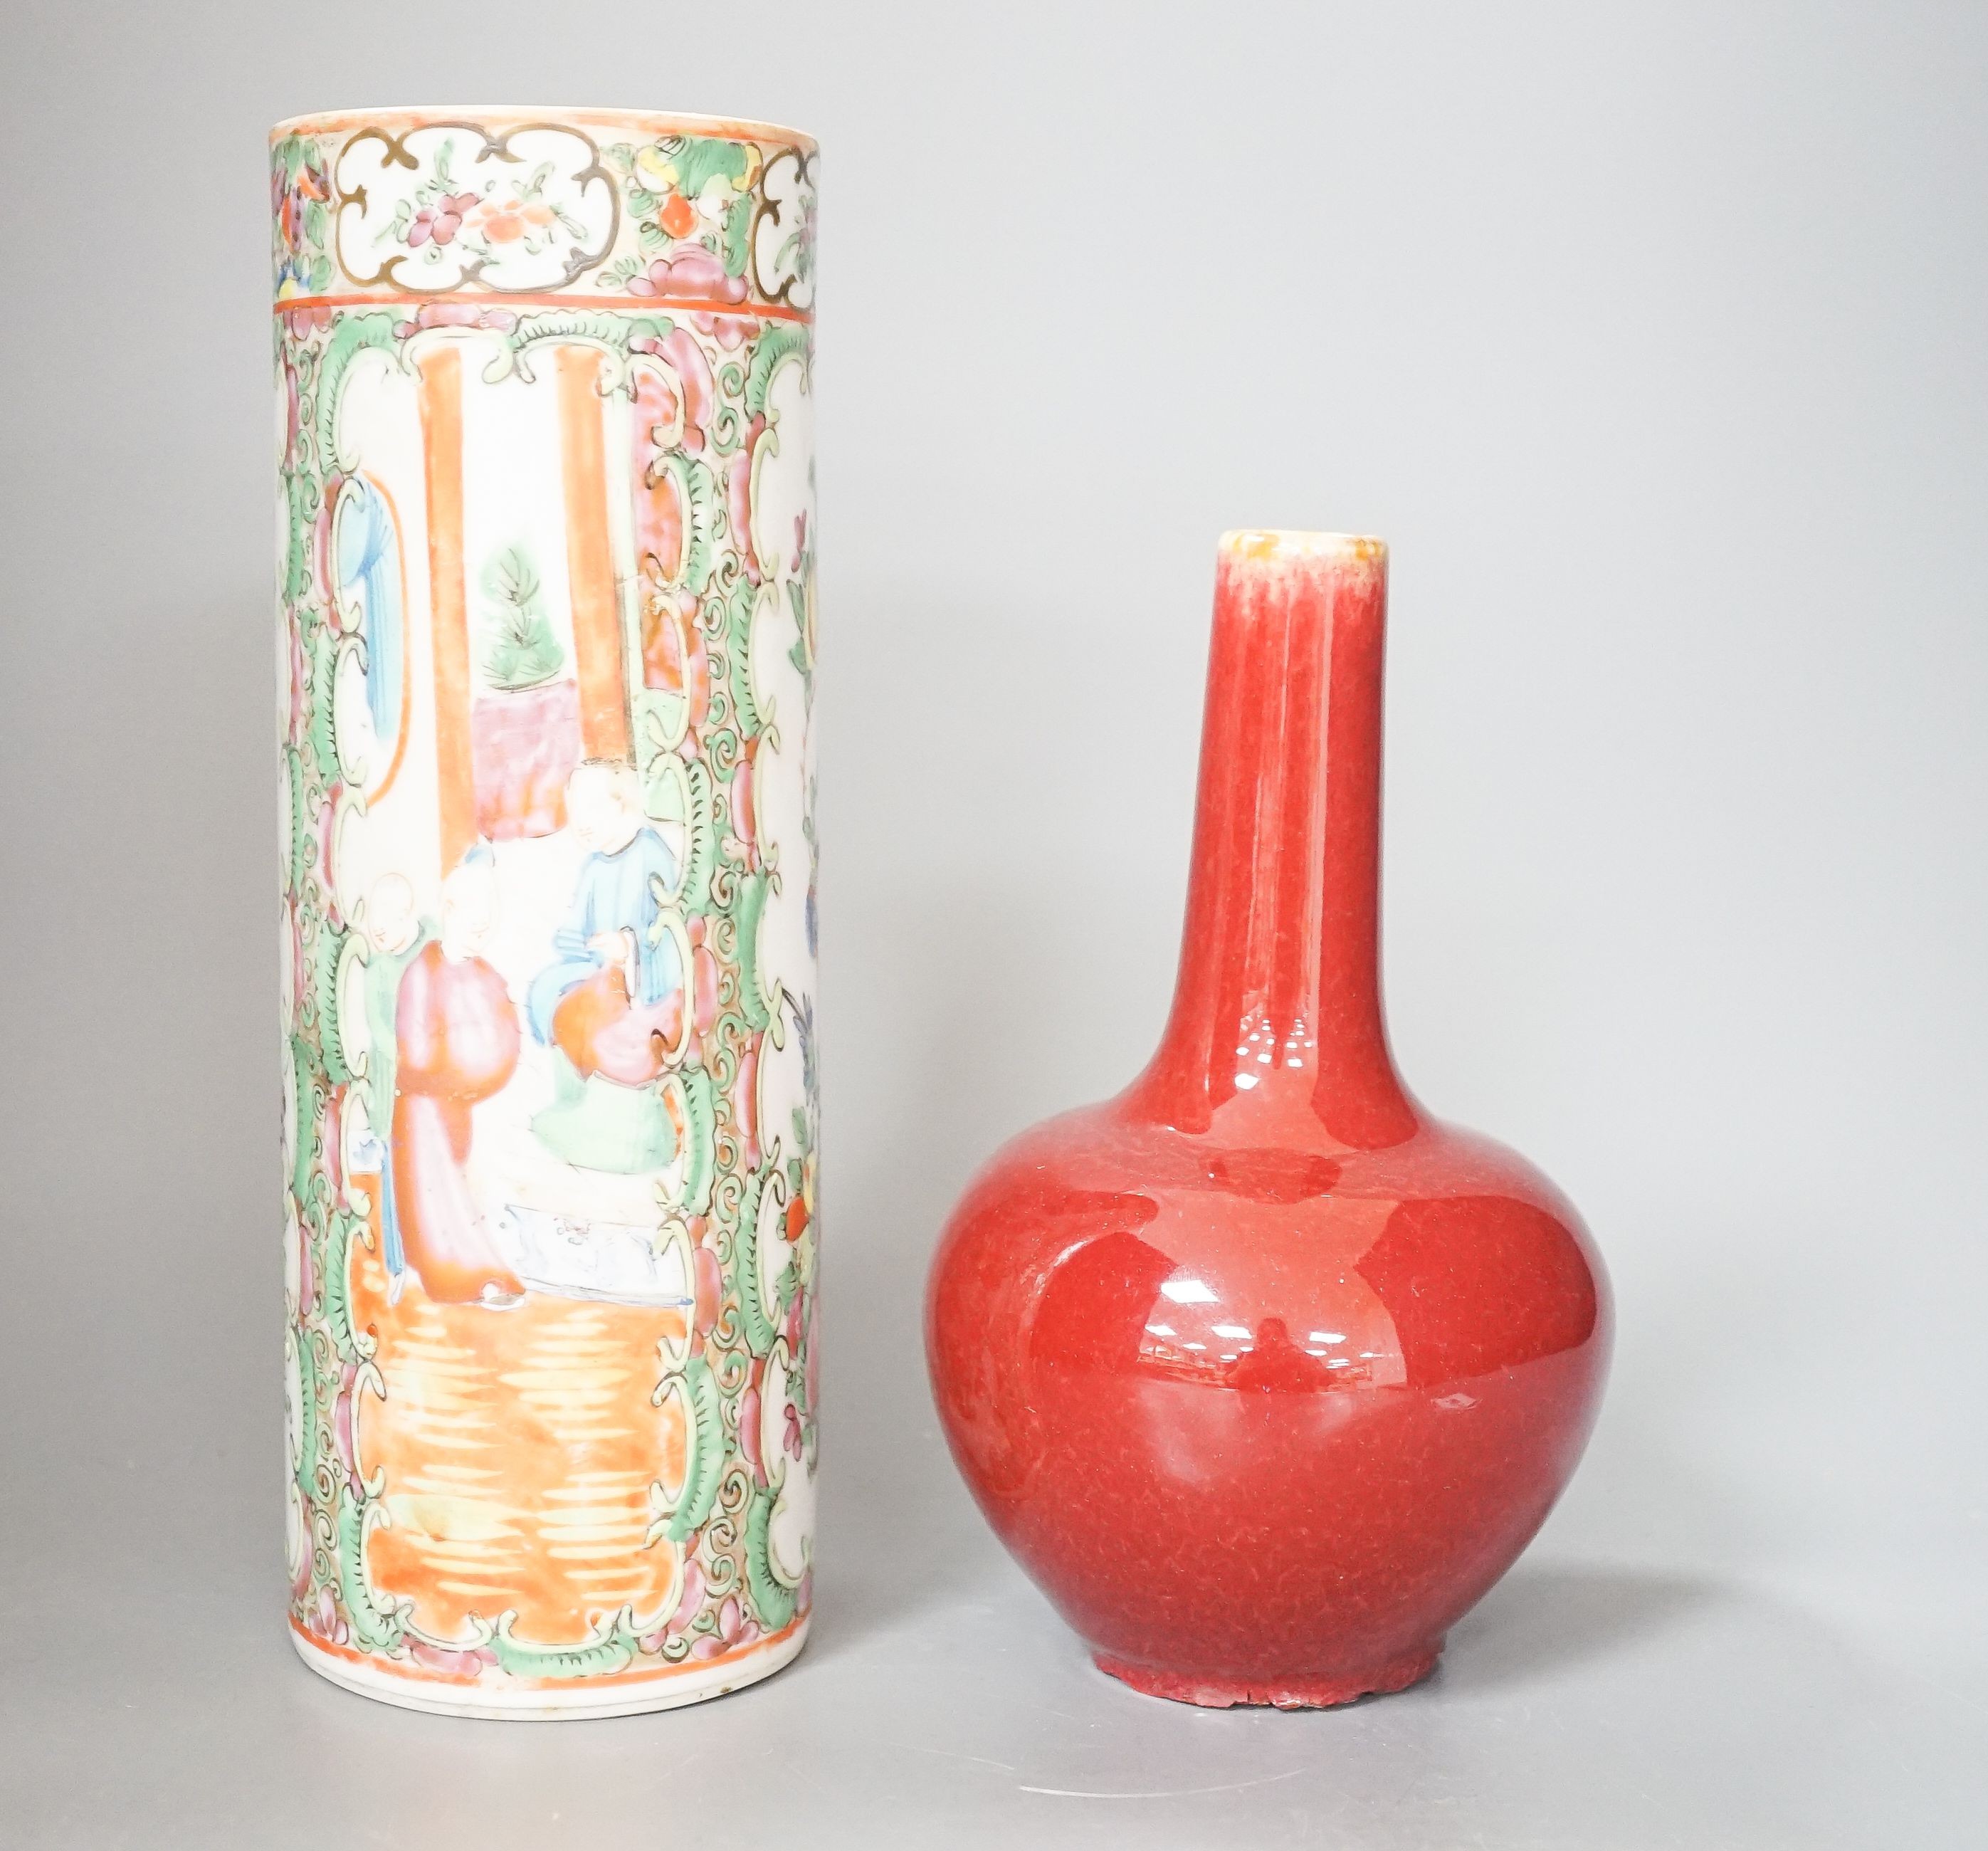 A Chinese famille rose cylindrical vase and a flambé bottle vase vase, tallest 24 cm